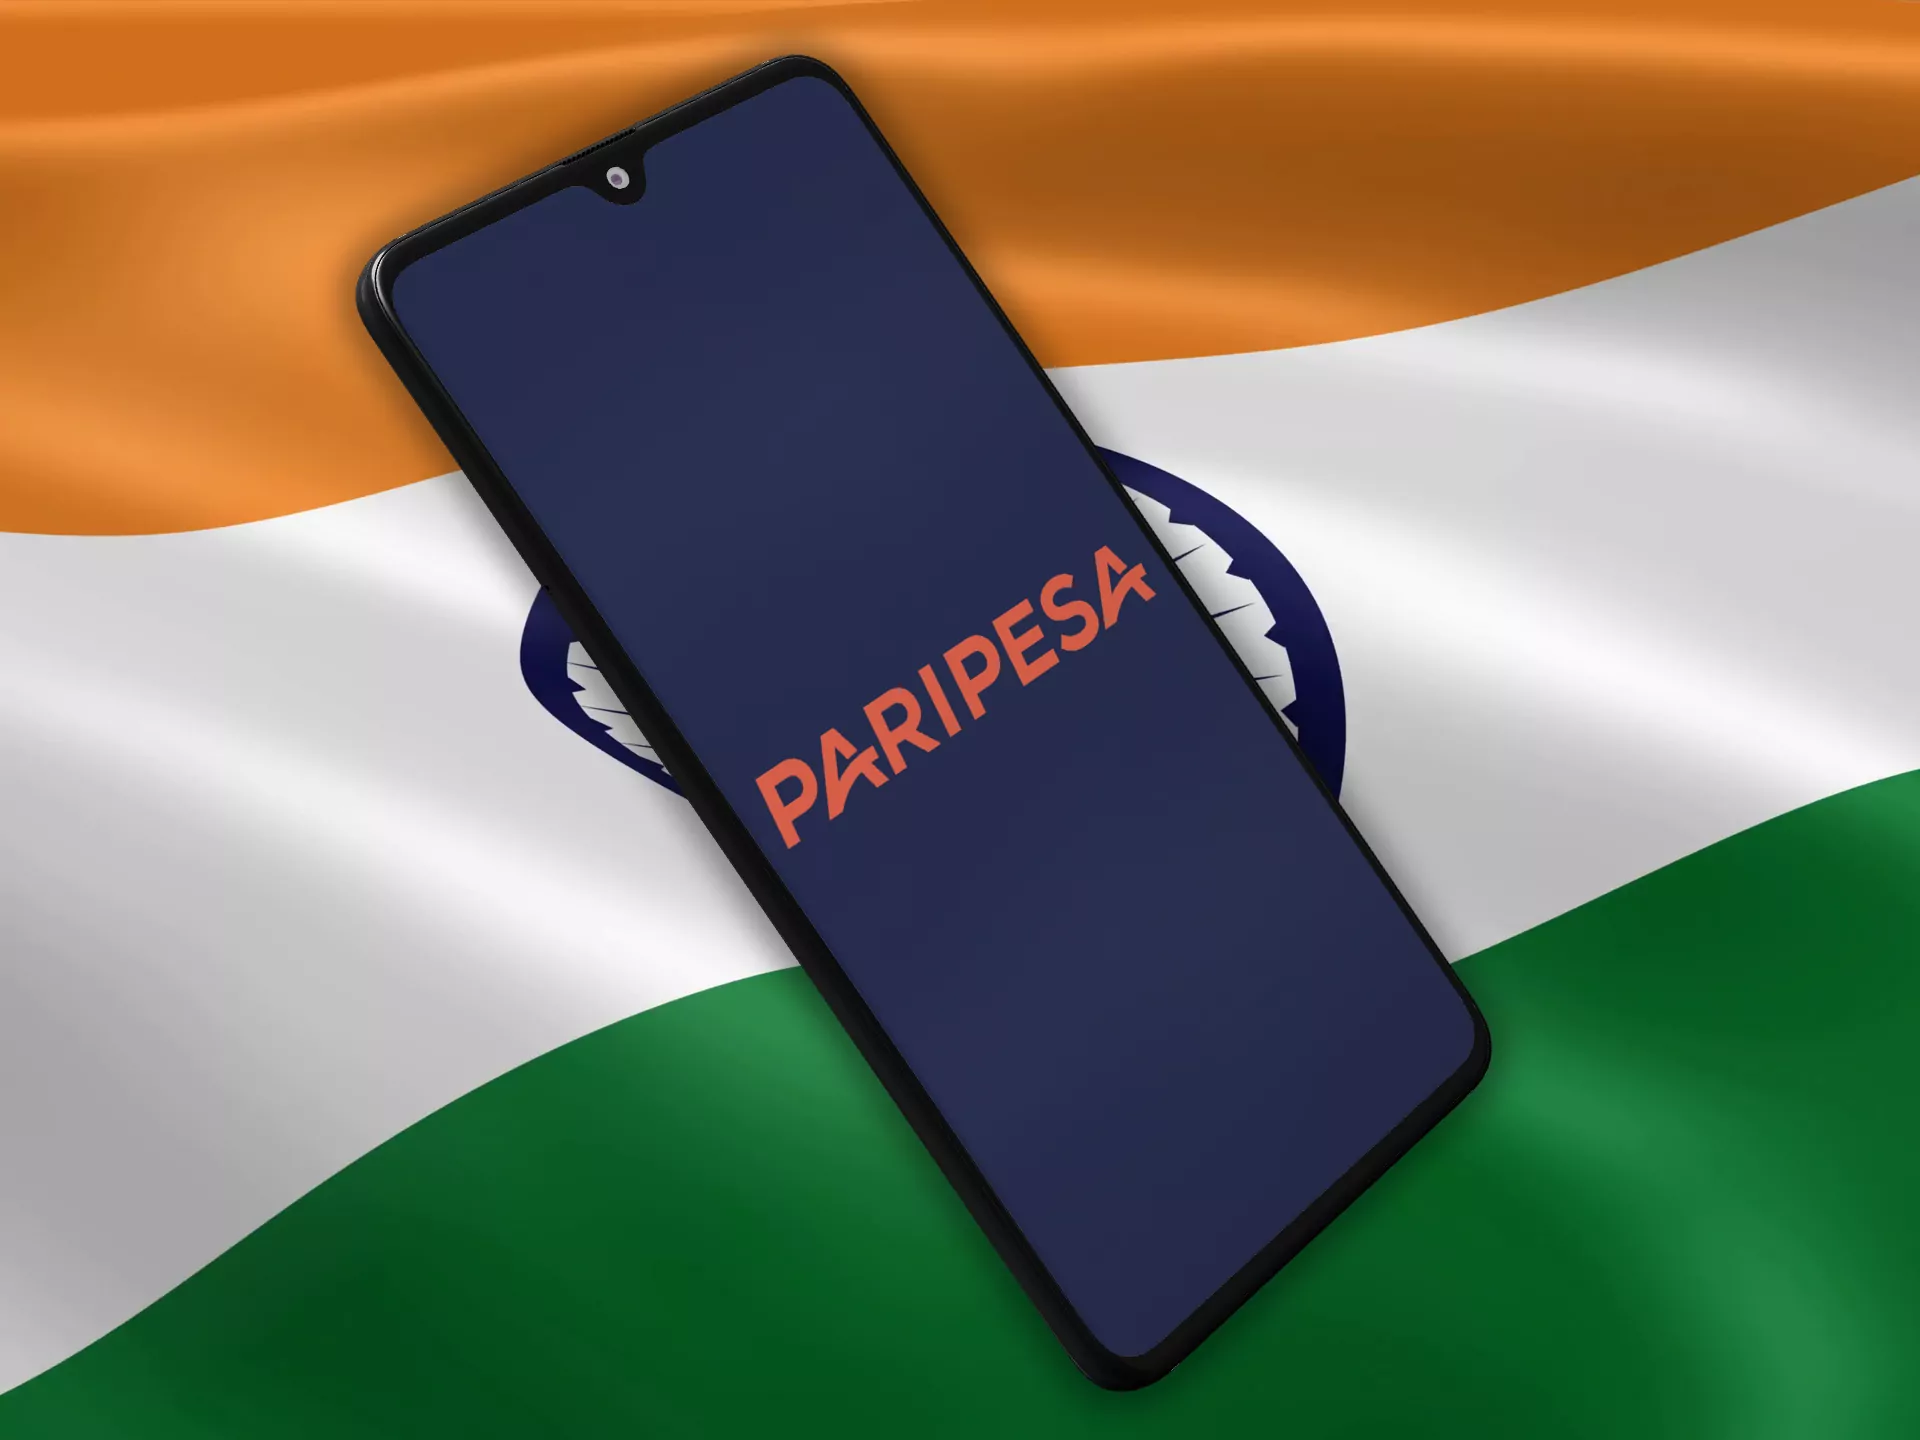 Paripesa is legal in India.